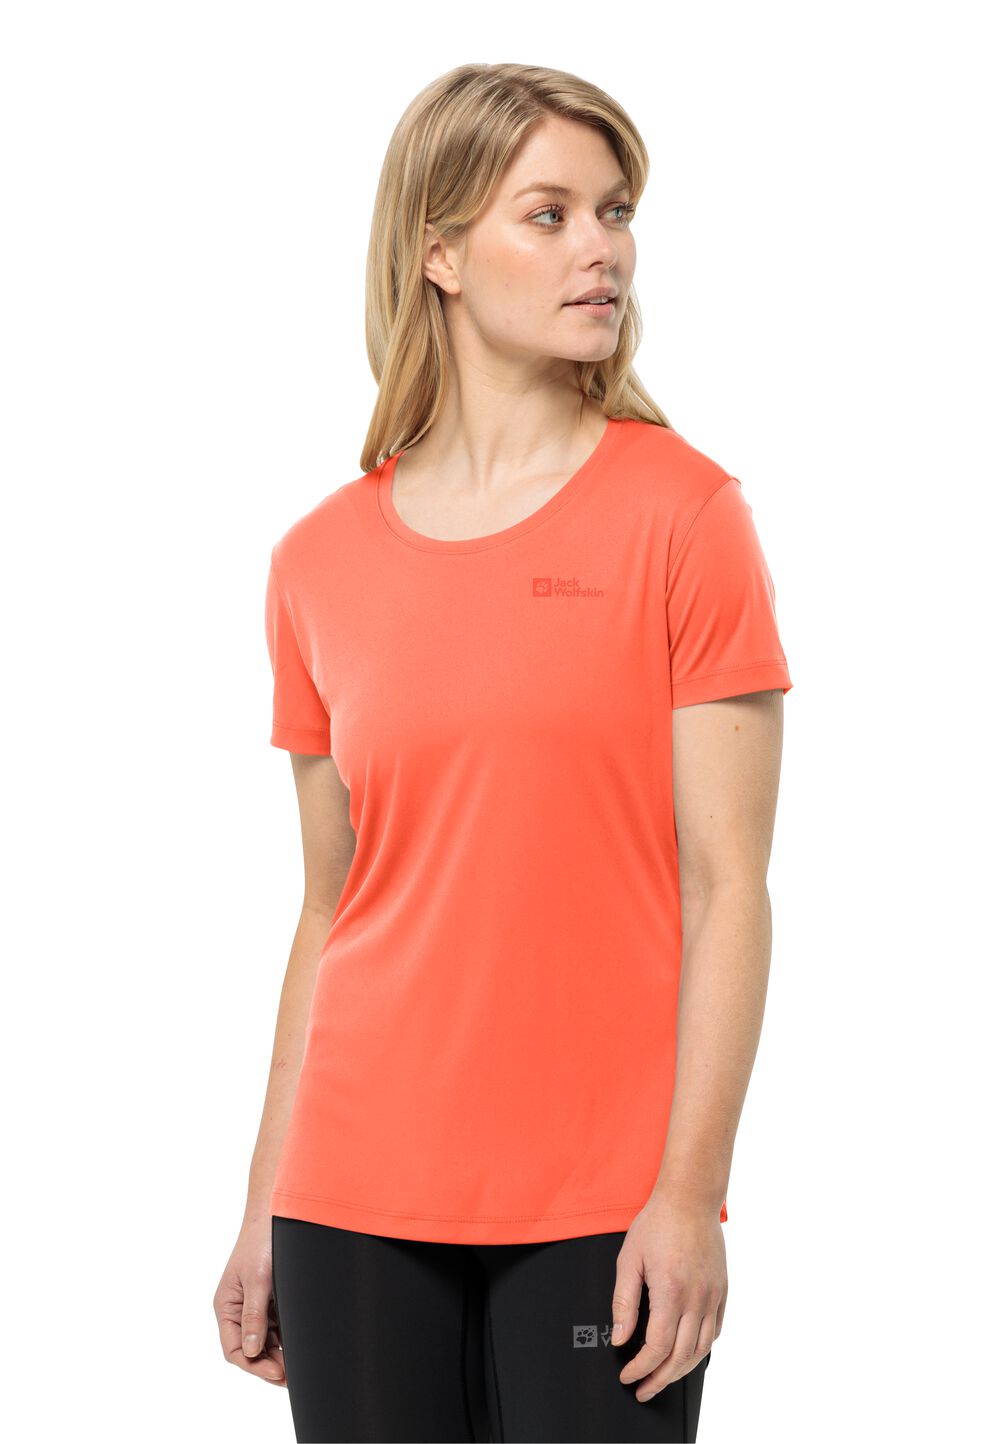 Jack Wolfskin Tech T-Shirt Women Functioneel shirt Dames XS rood digital orange